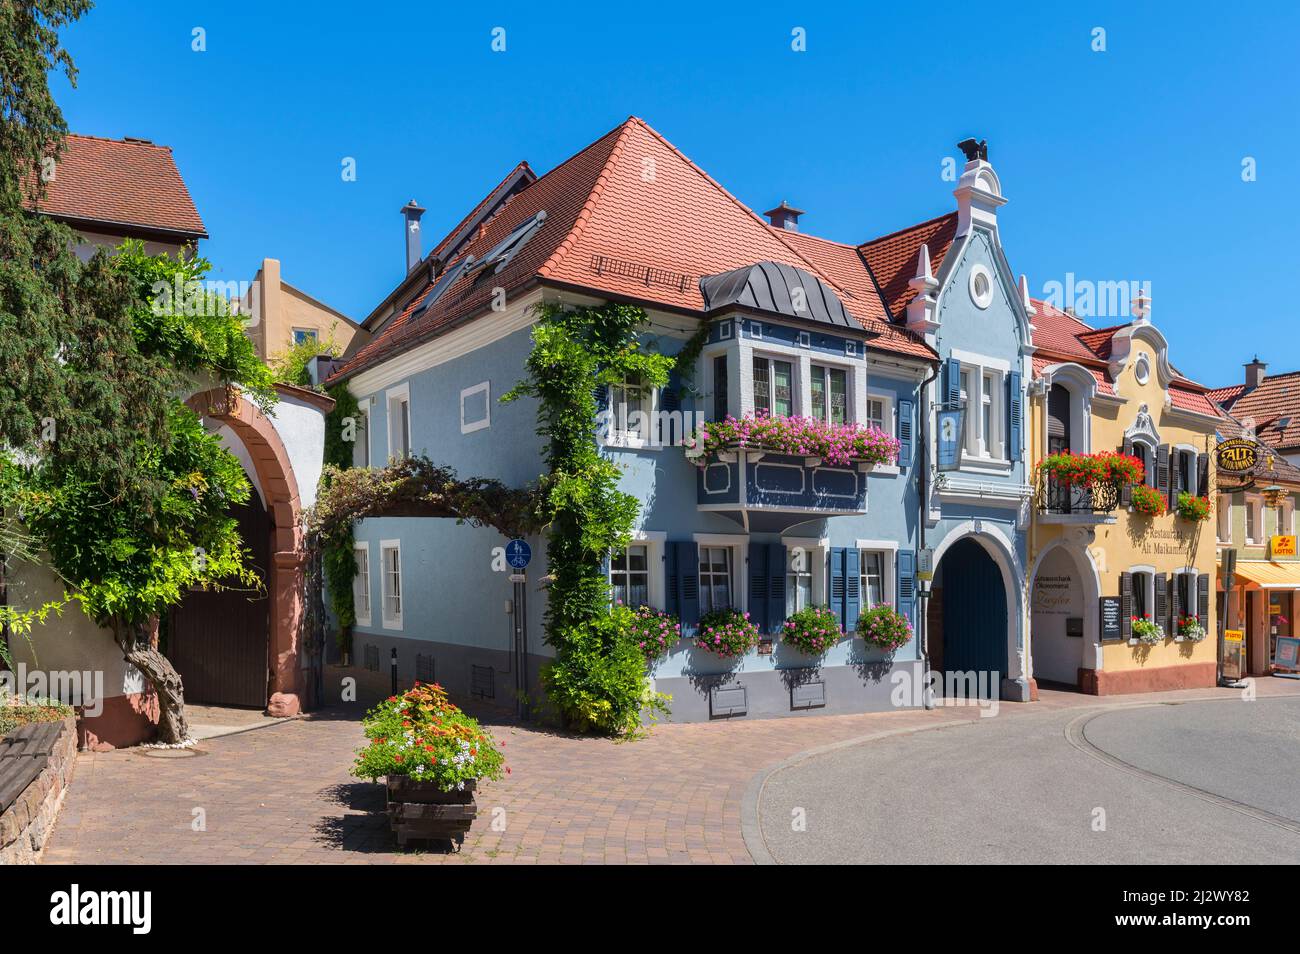 Wine shop in Maikammer, Palatinate Wine Route, Rhineland-Palatinate, Germany Stock Photo